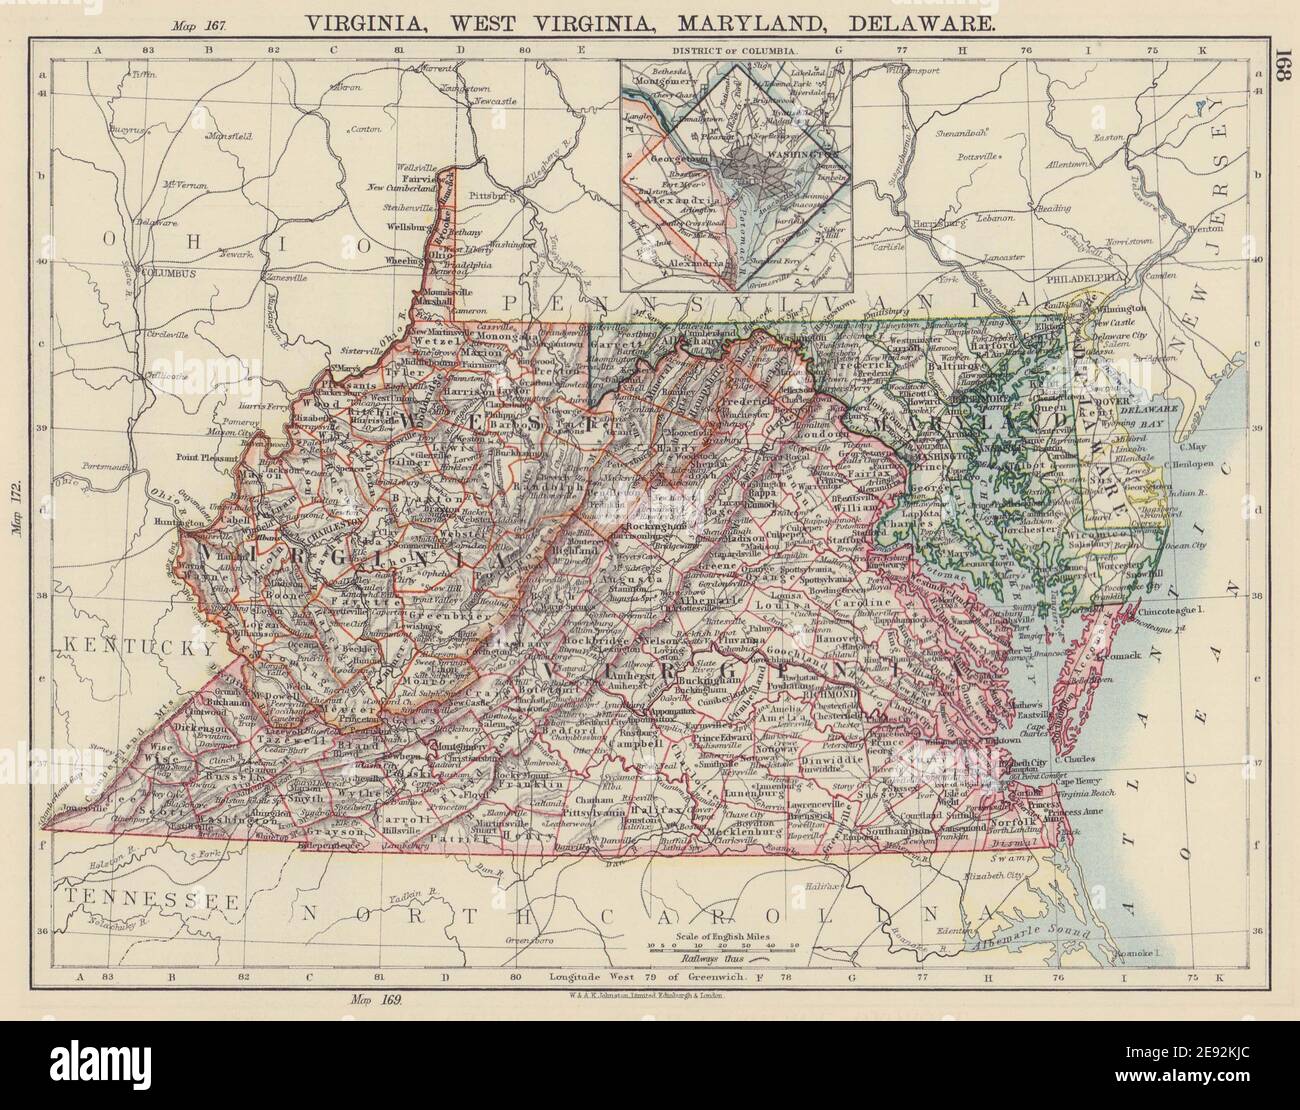 US-STAATEN IM MITTLEREN ATLANTIK, VA West Virginia, Maryland, Delaware, Washington DC 1901 MAP Stockfoto